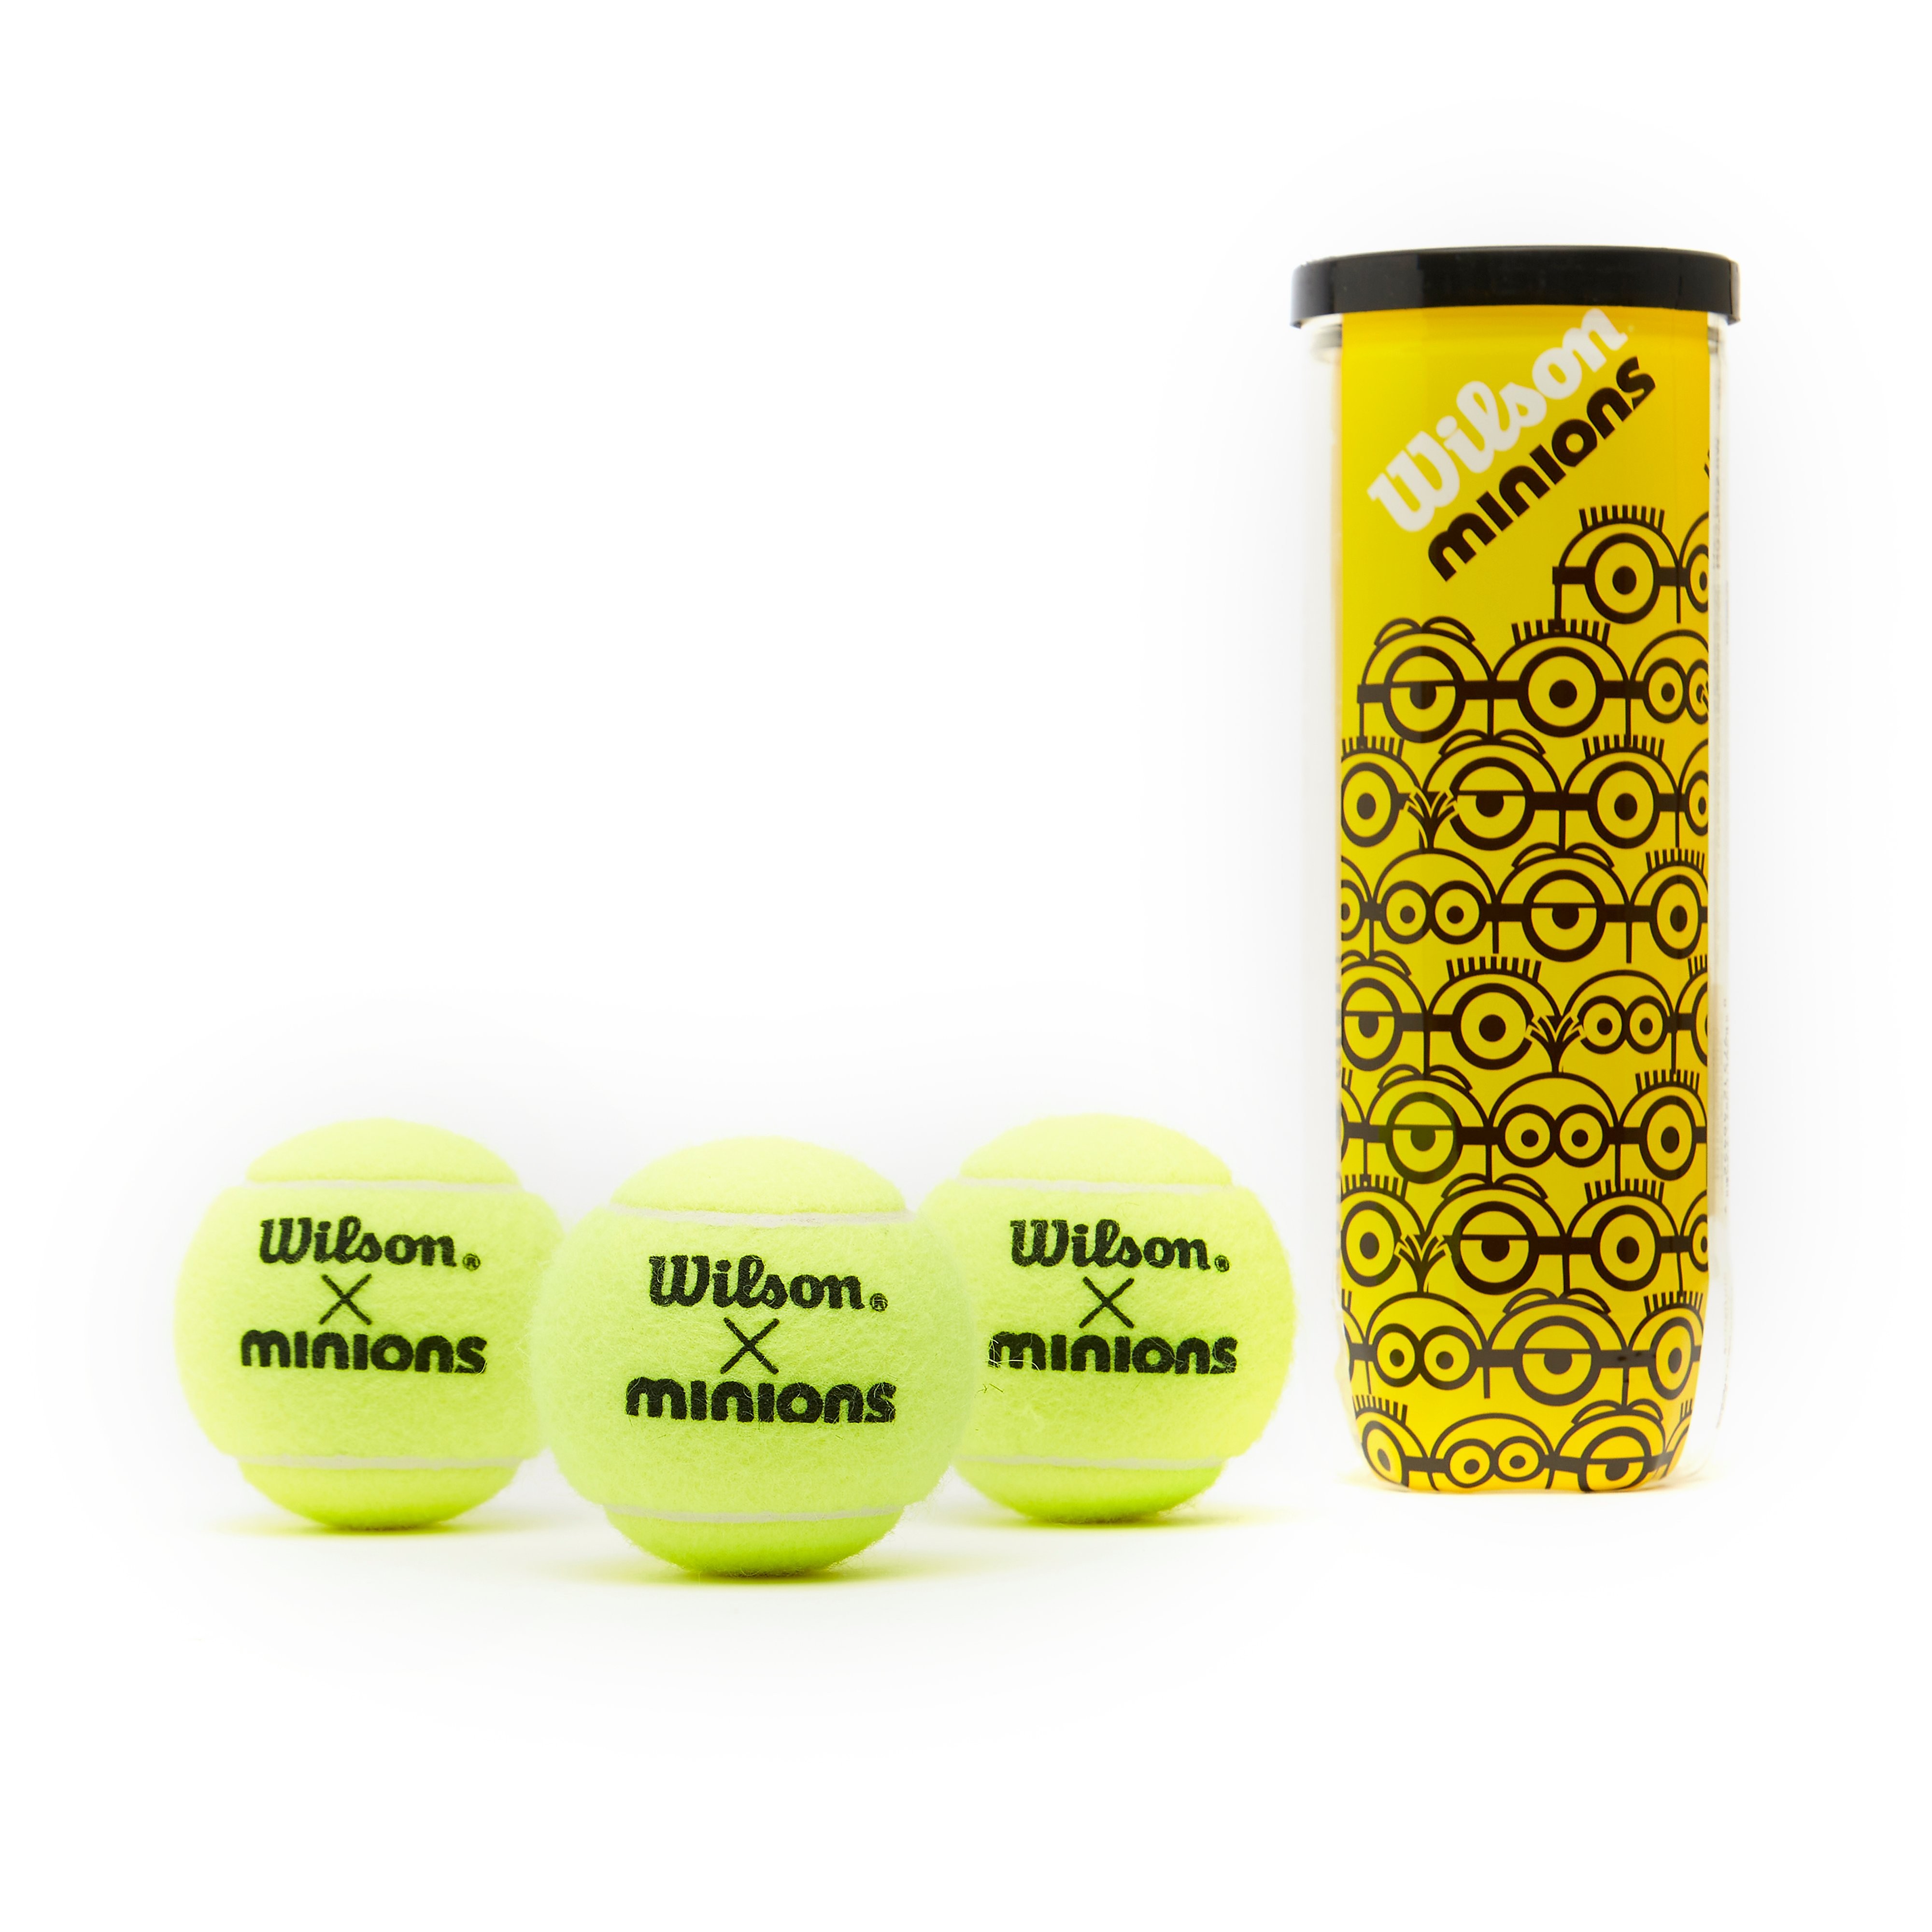 Wilson wilson minions championship tennisballen 3 pack geel